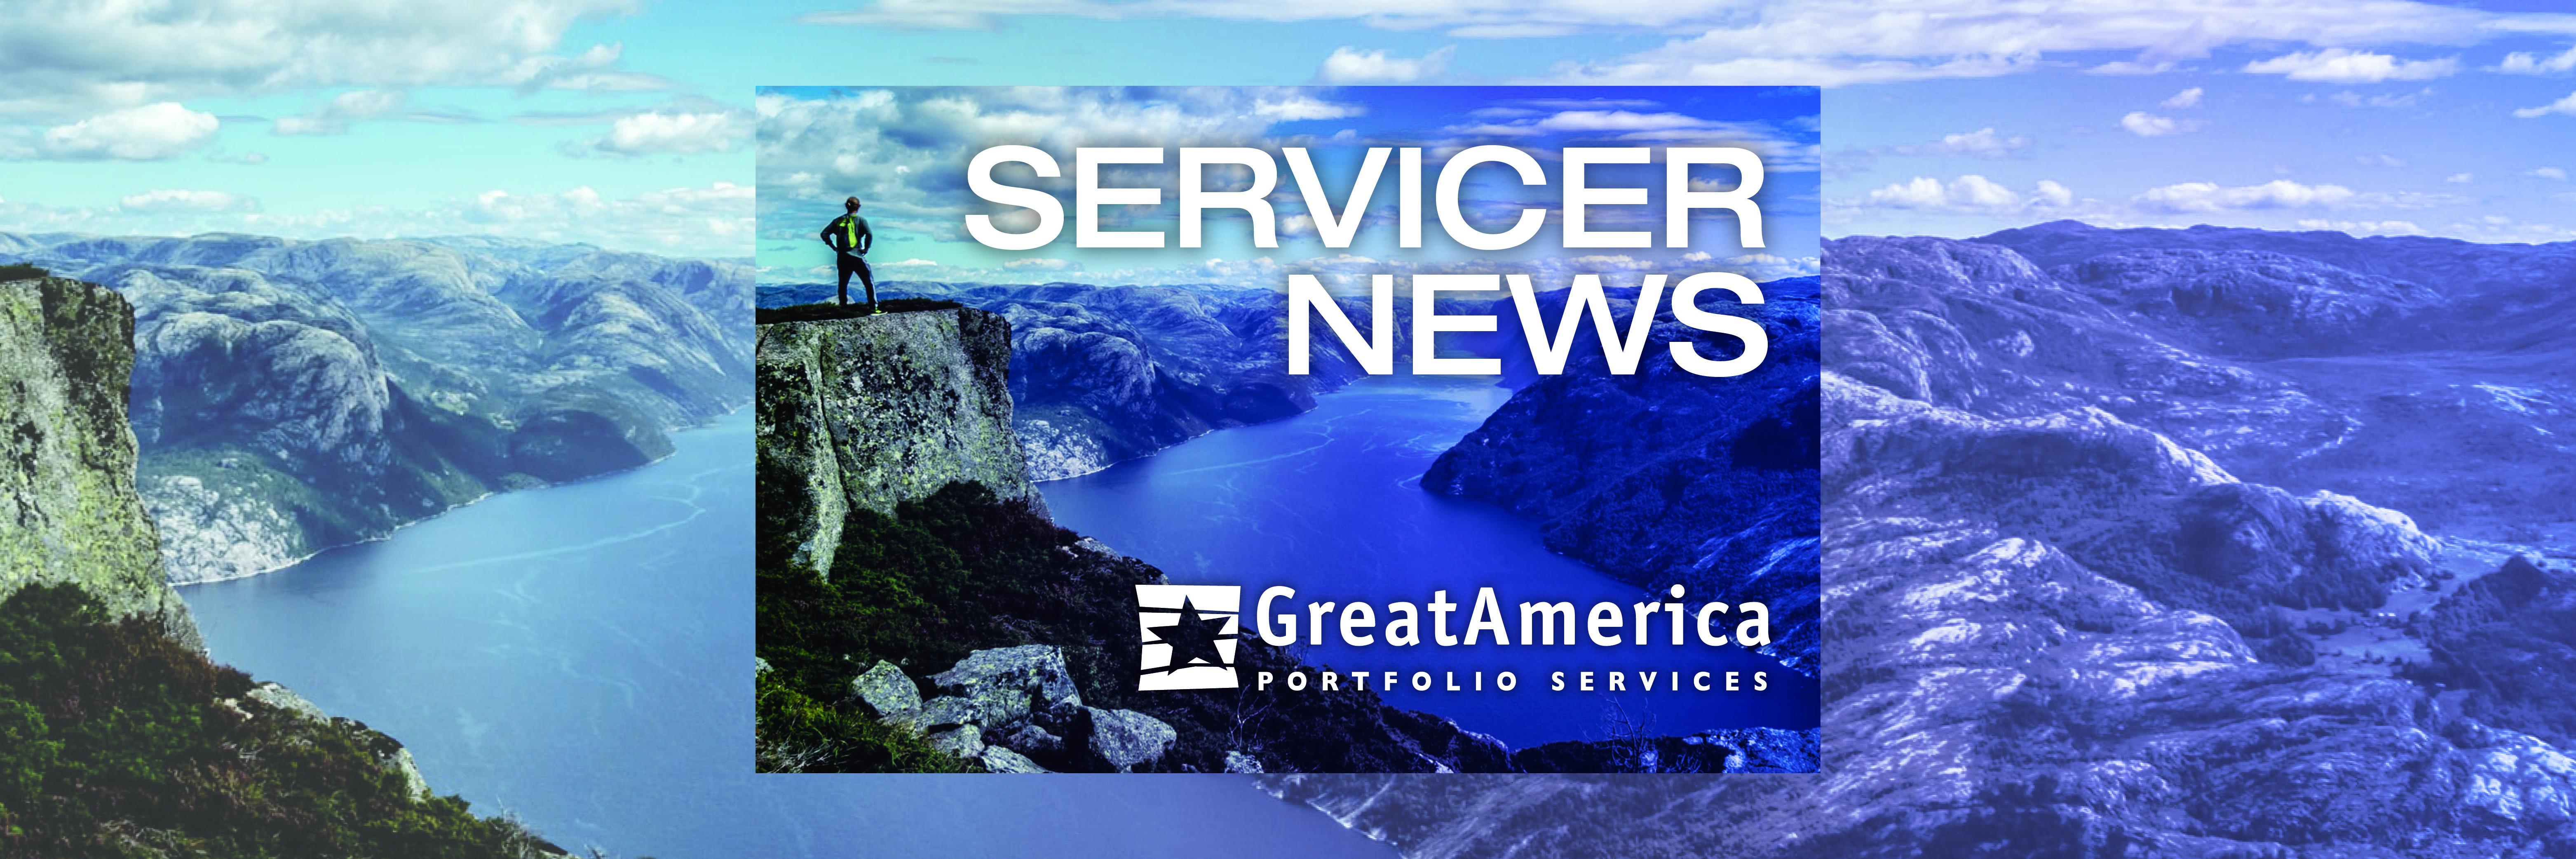 Servicer News Vol. 28 Summer 2020